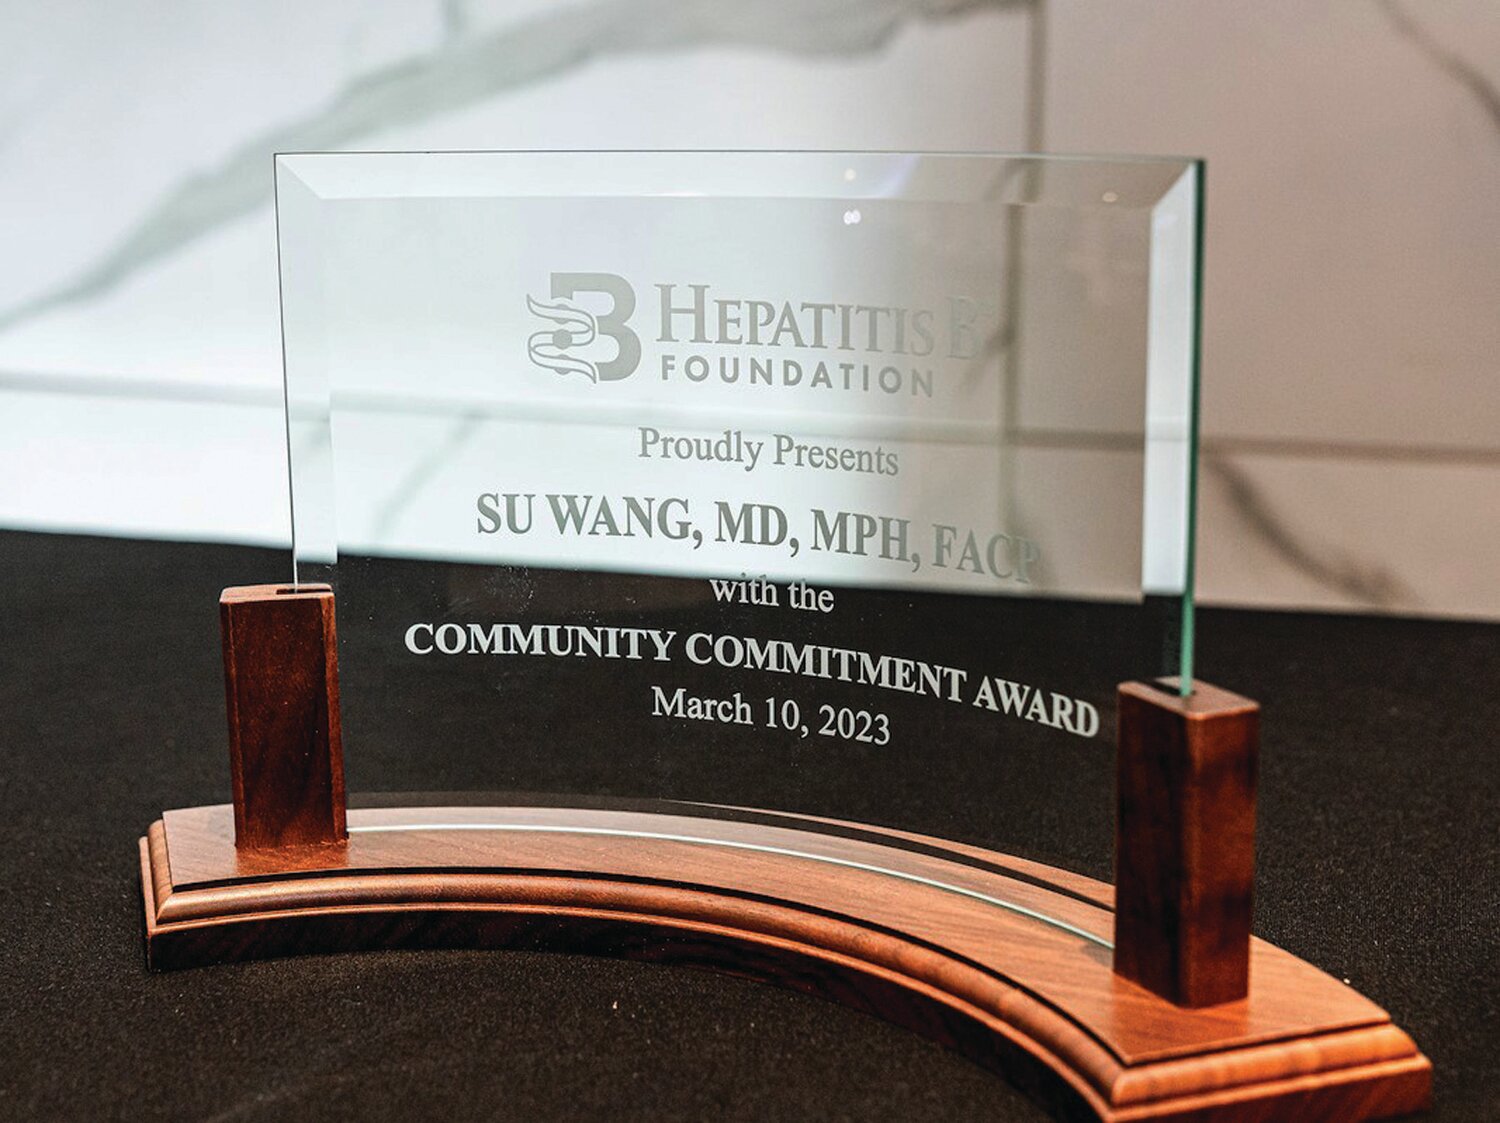 The Community Commitment Award.